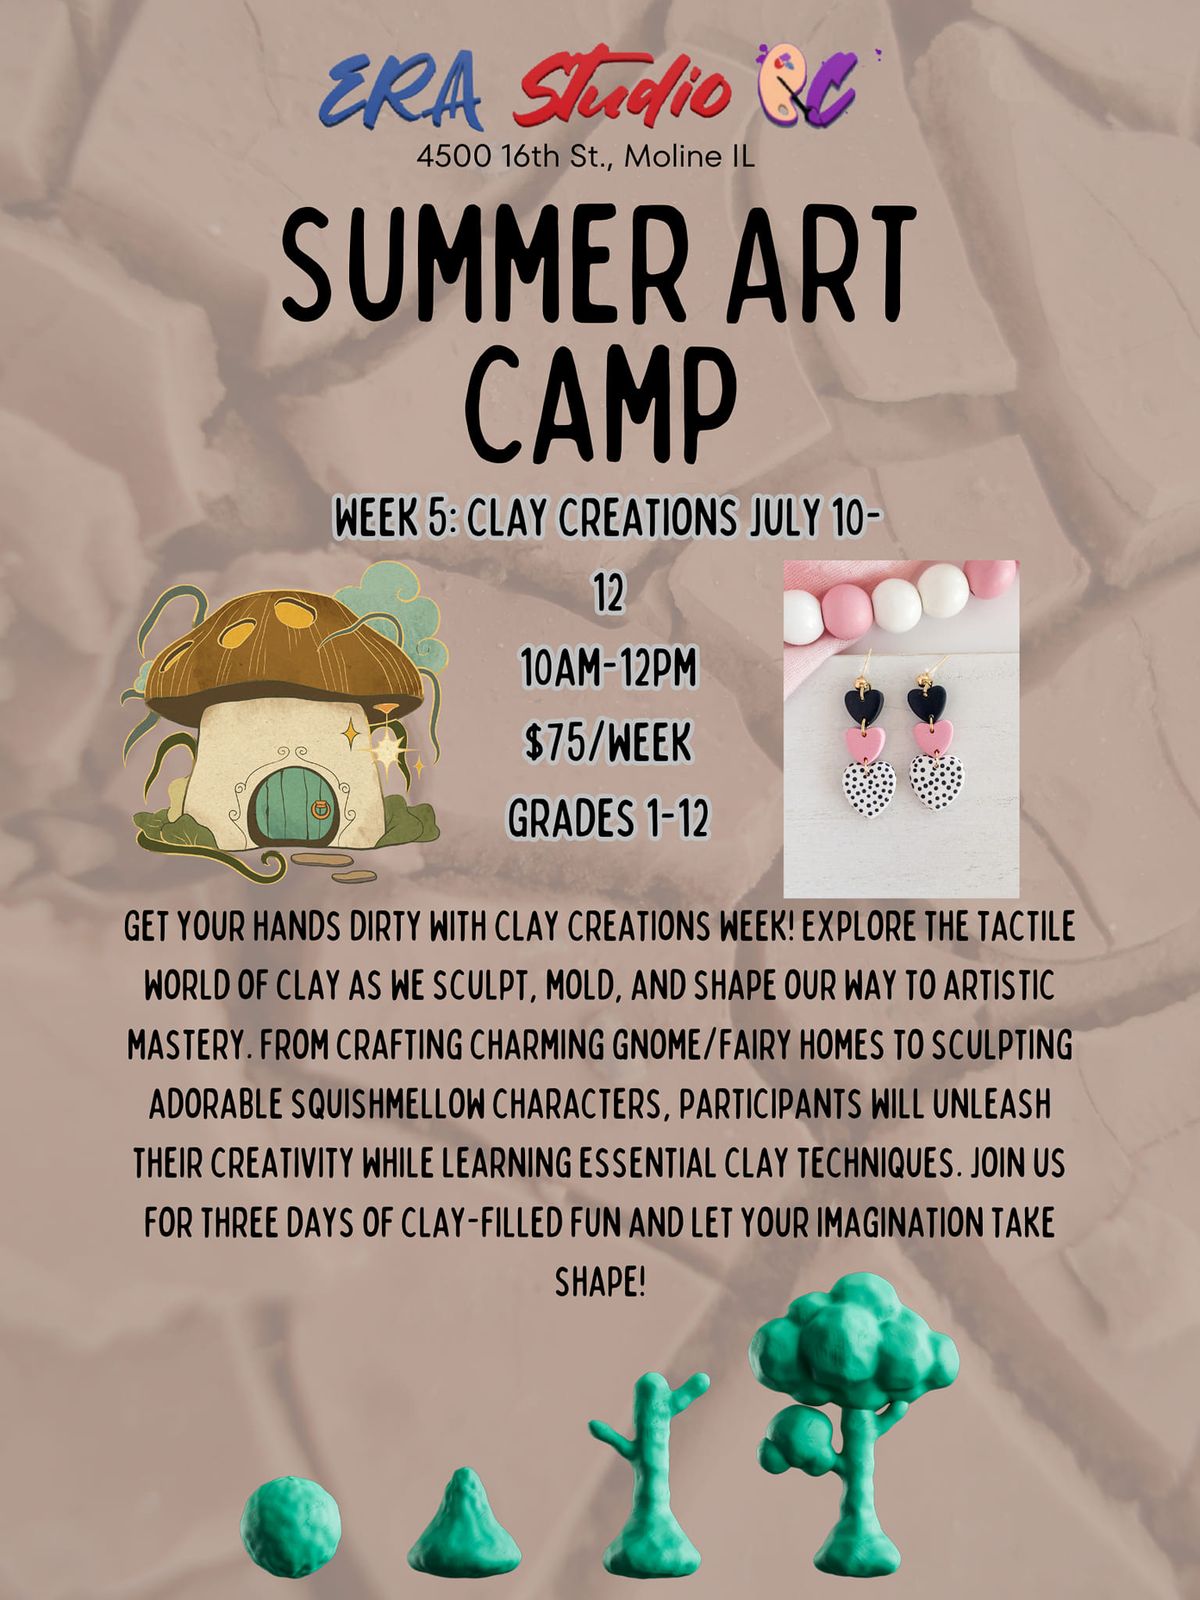 Summer ART Camp: Clay Creations 